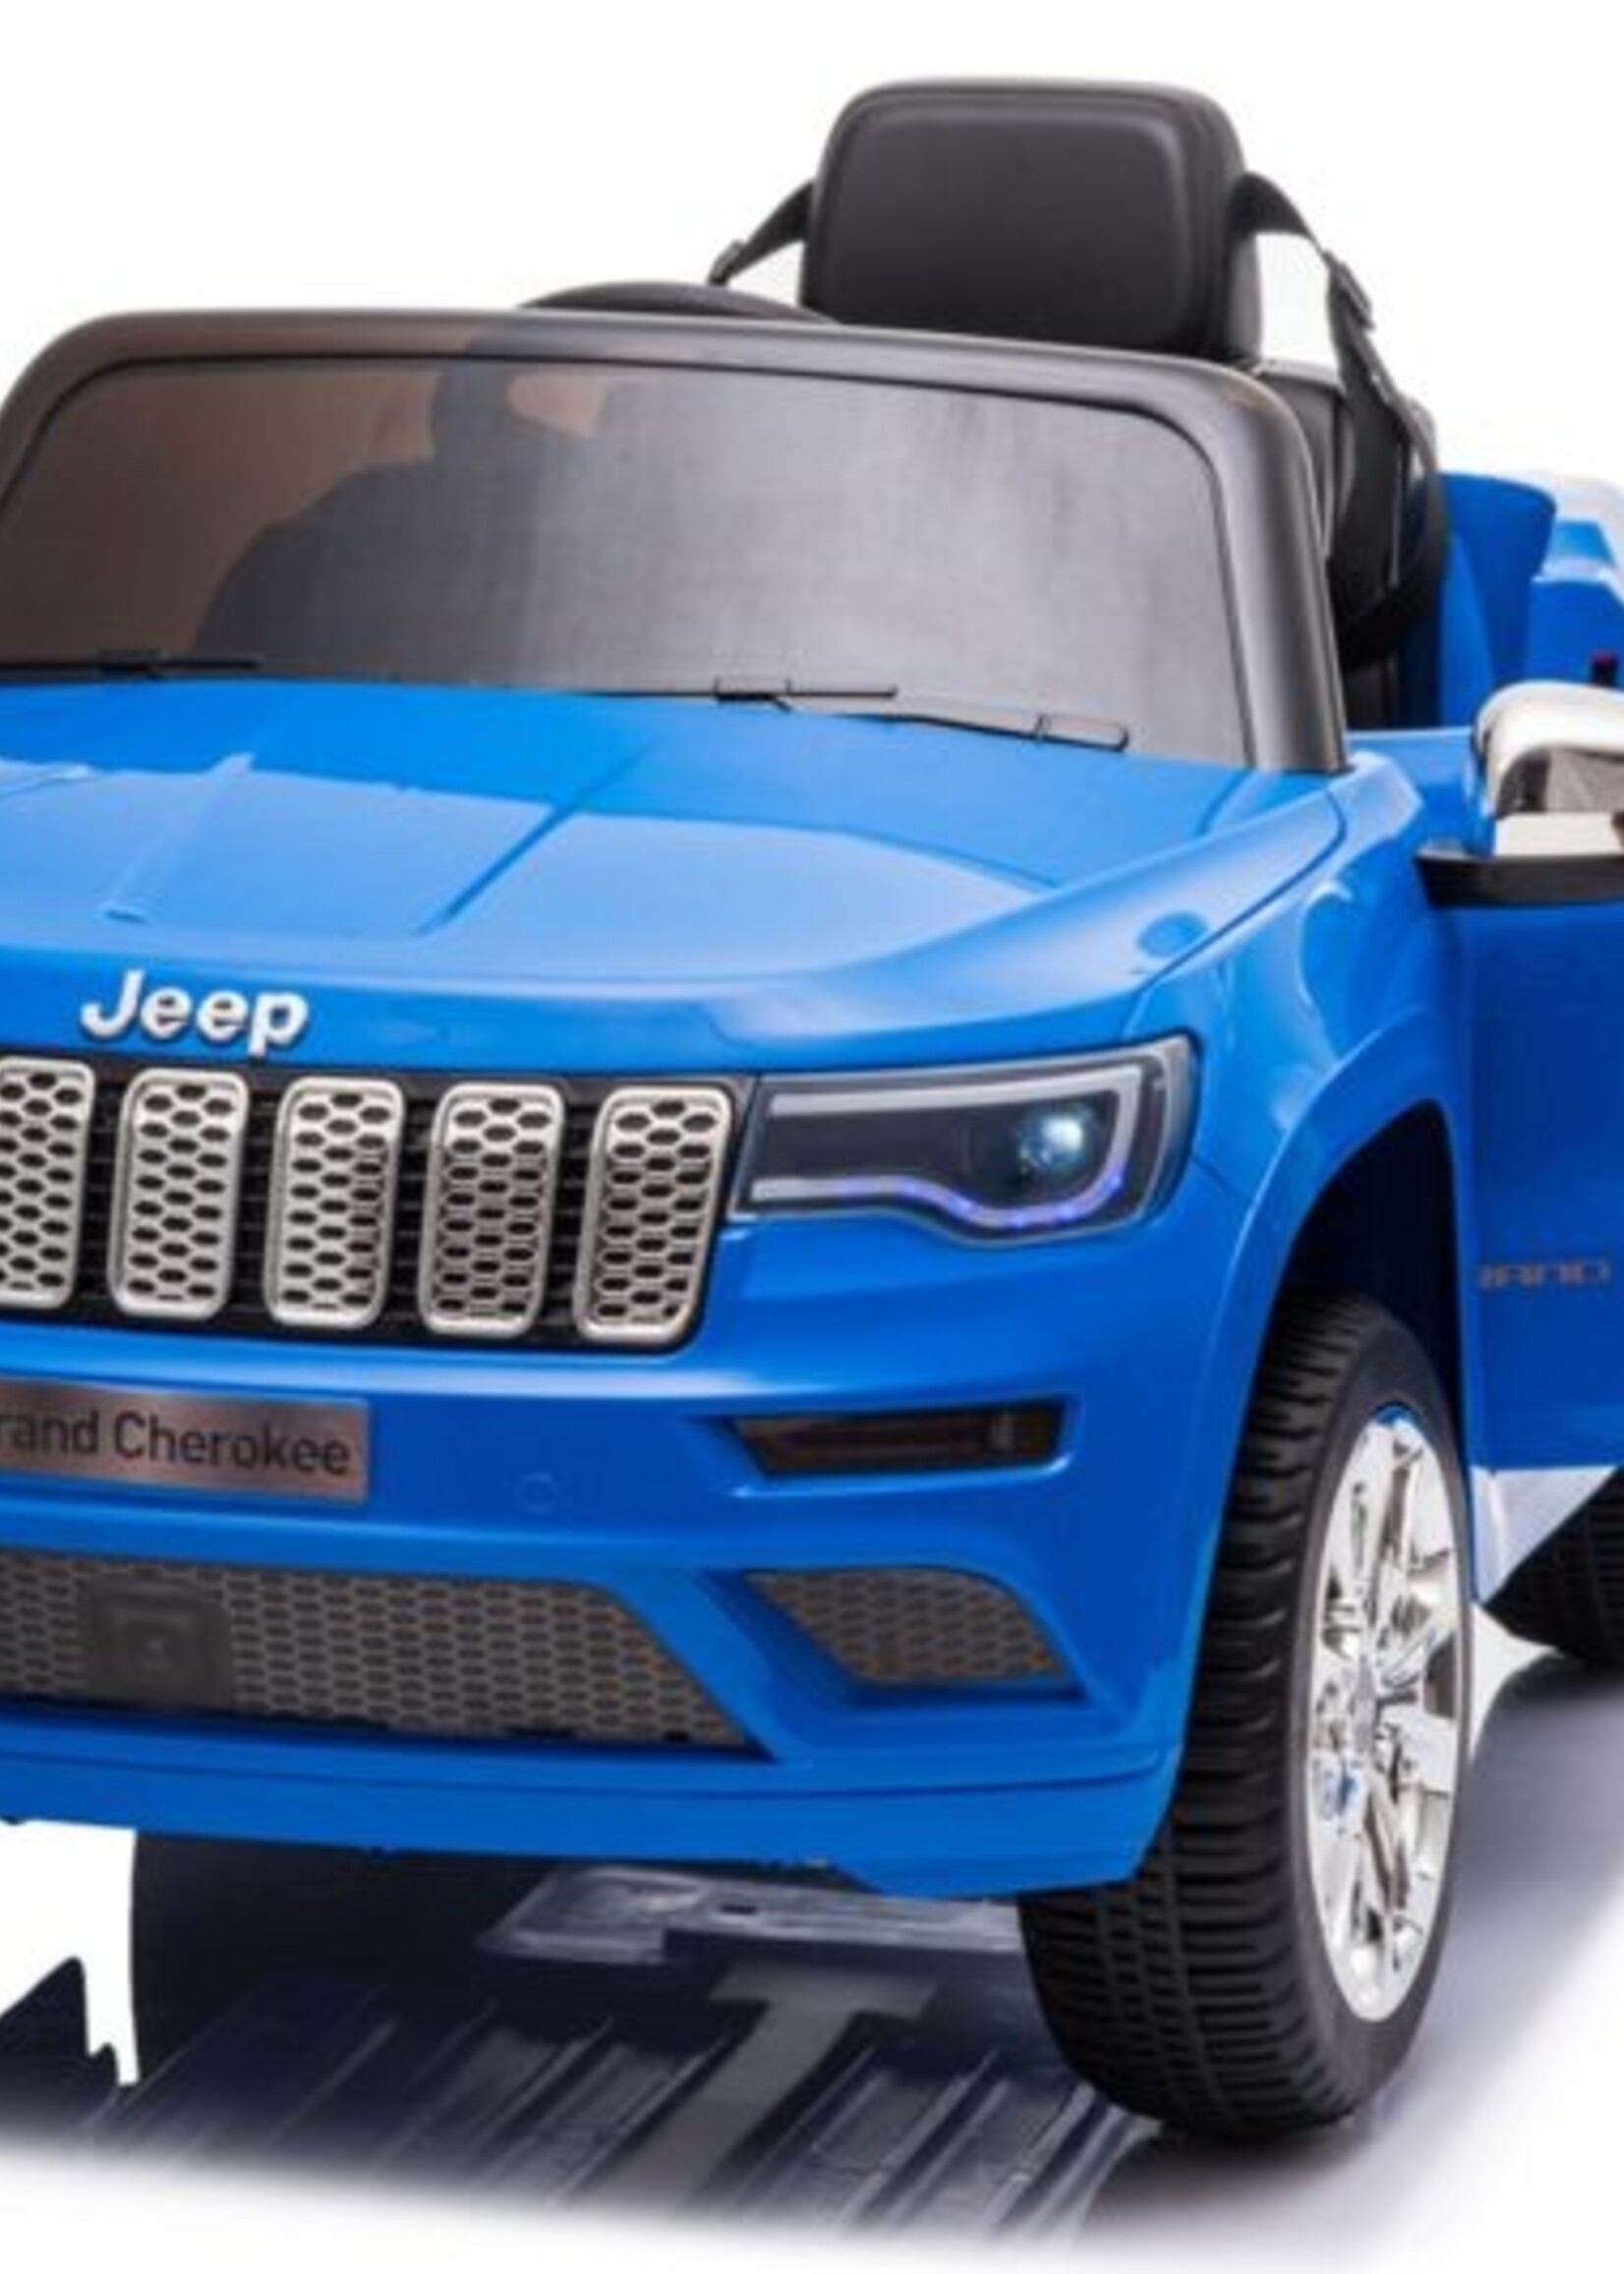 Jeep Grande Cherokee blauwe kinderauto